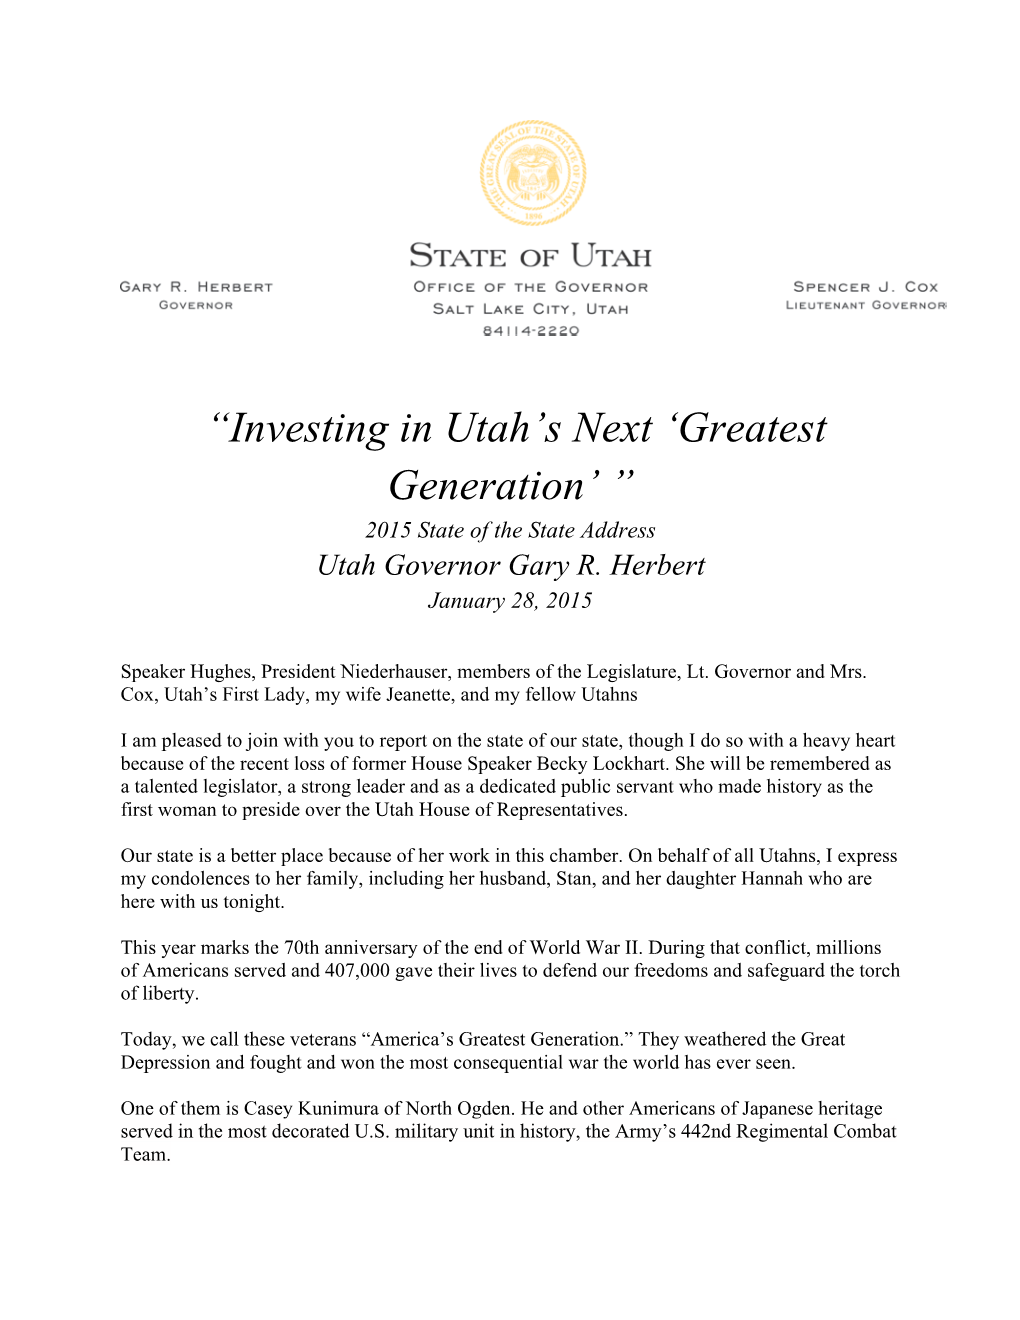 “Investing in Utah's Next 'Greatest Generation' ”